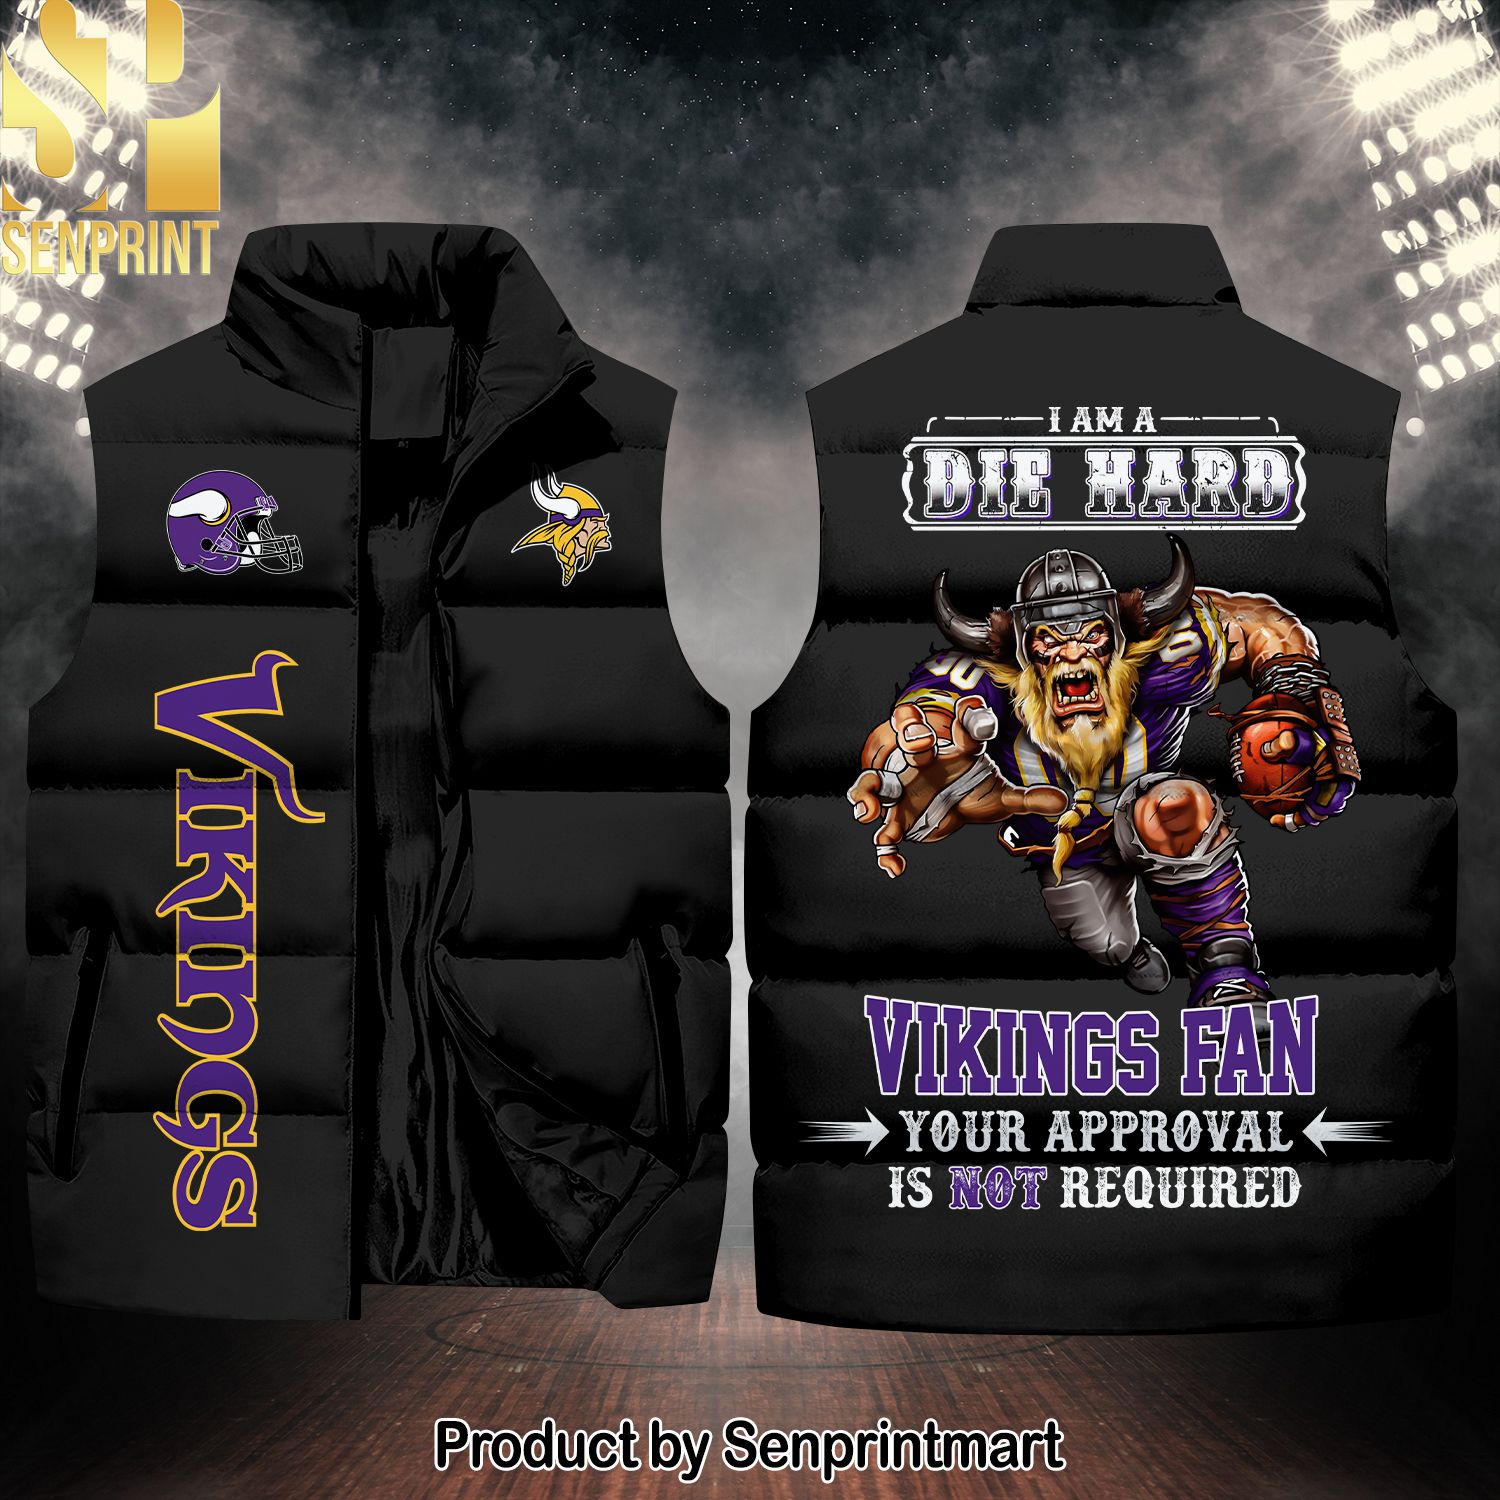 National Football League Minnesota Vikings Die Hard Fan Hot Outfit Sleeveless Jacket